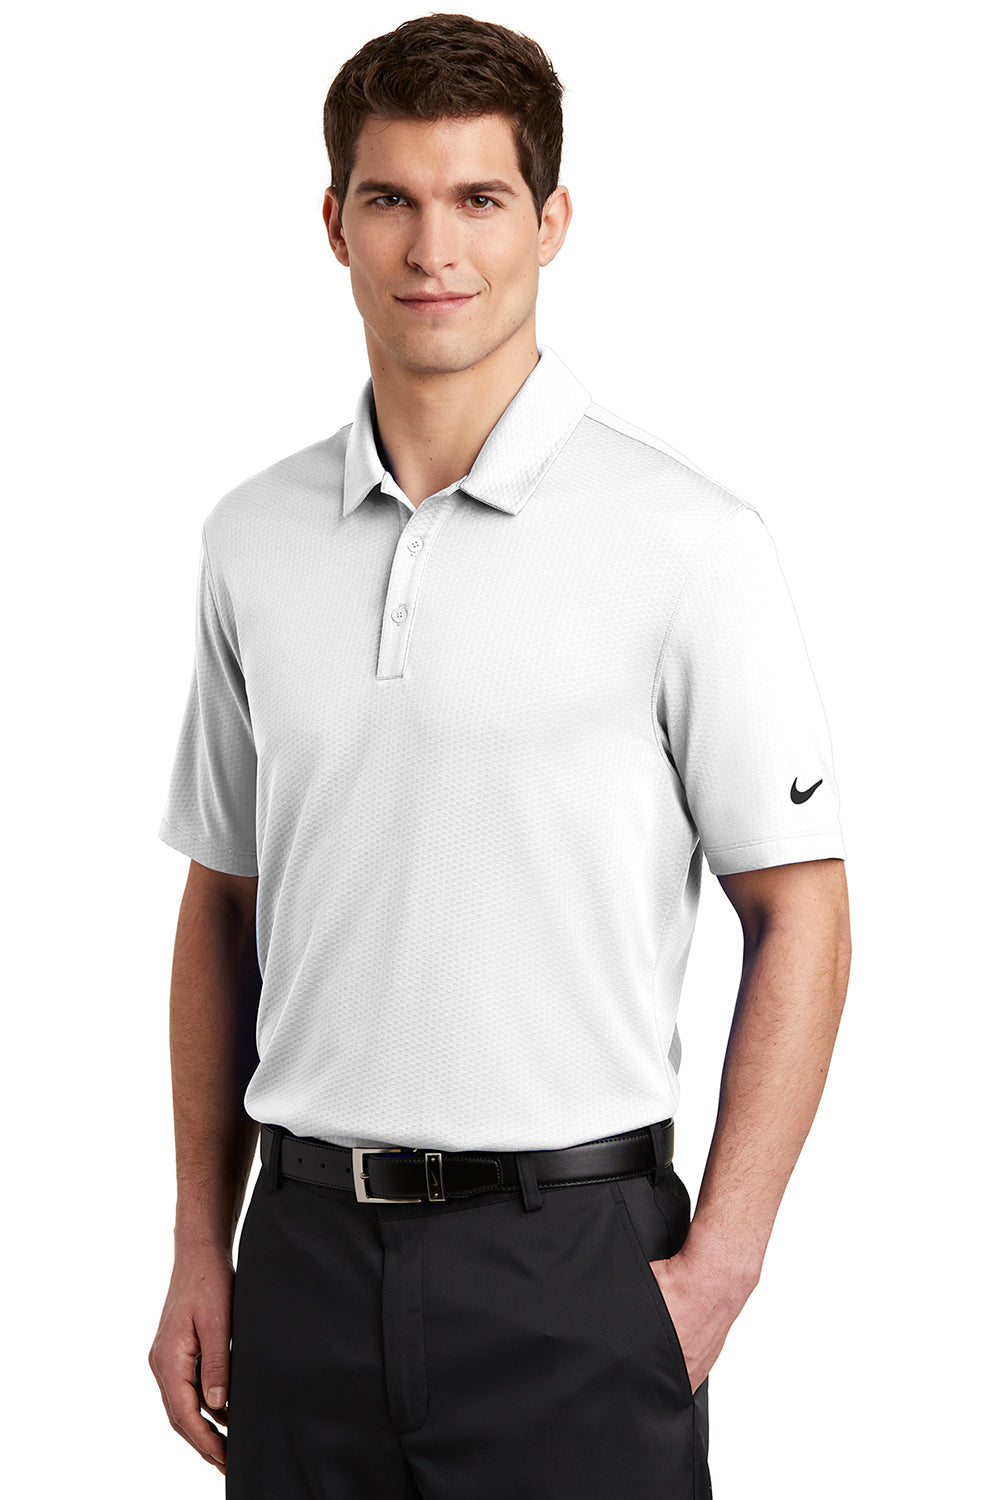 Nike NKAH6266 Mens Dri-Fit Moisture Wicking Short Sleeve Polo Shirt White Model 3Q